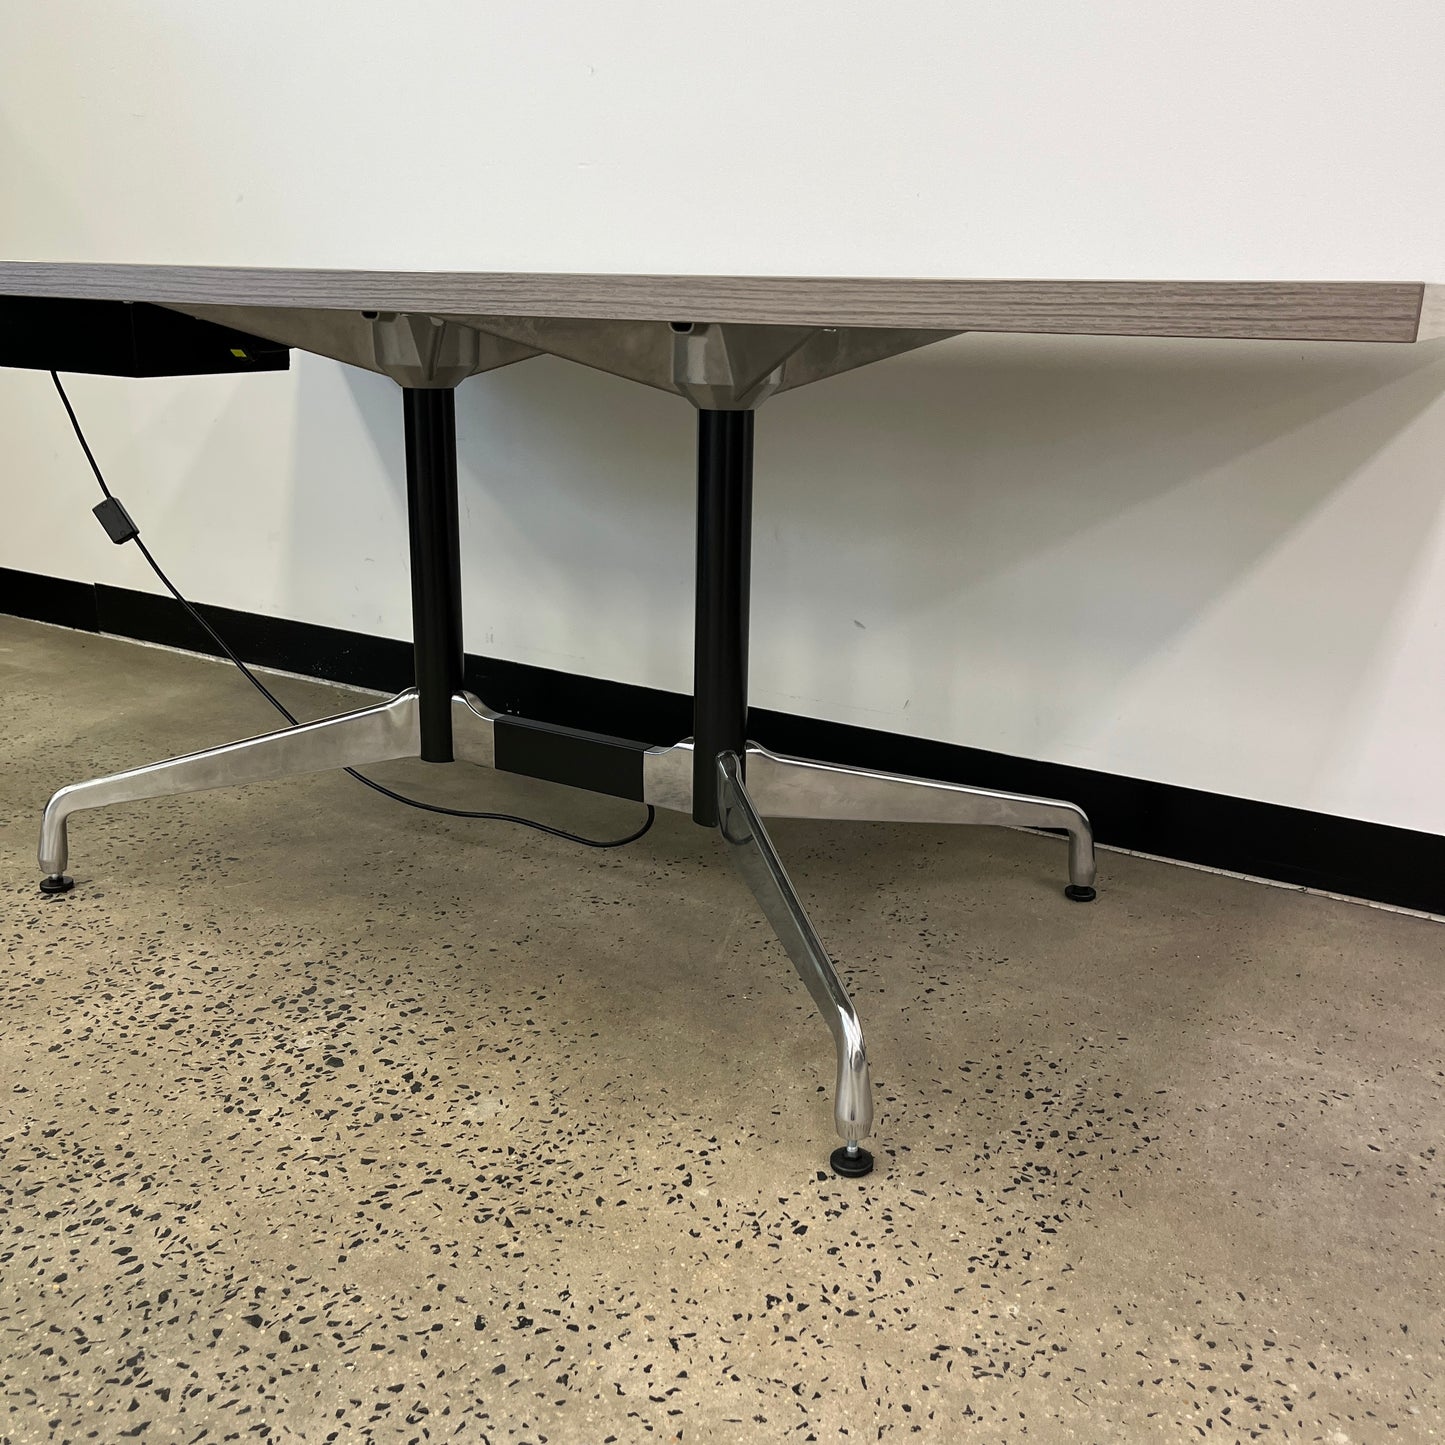 Eames Segmented Table